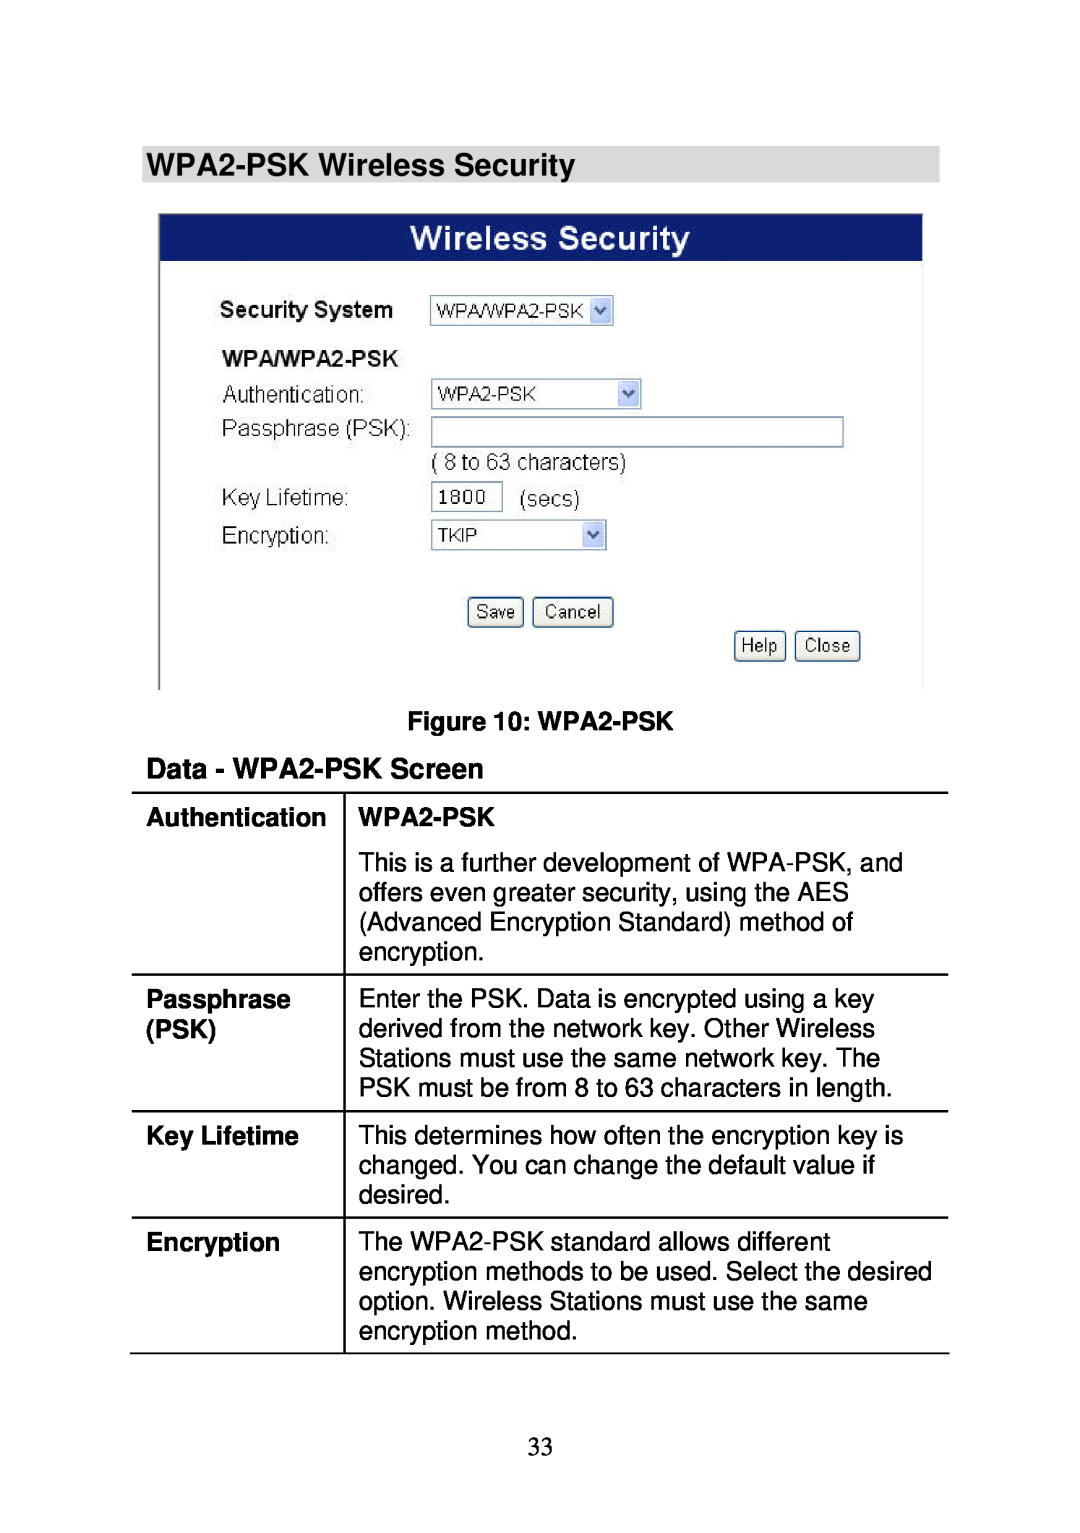 3Com WBR-6000 WPA2-PSK Wireless Security, Data - WPA2-PSK Screen, Authentication, Passphrase, Key Lifetime, Encryption 